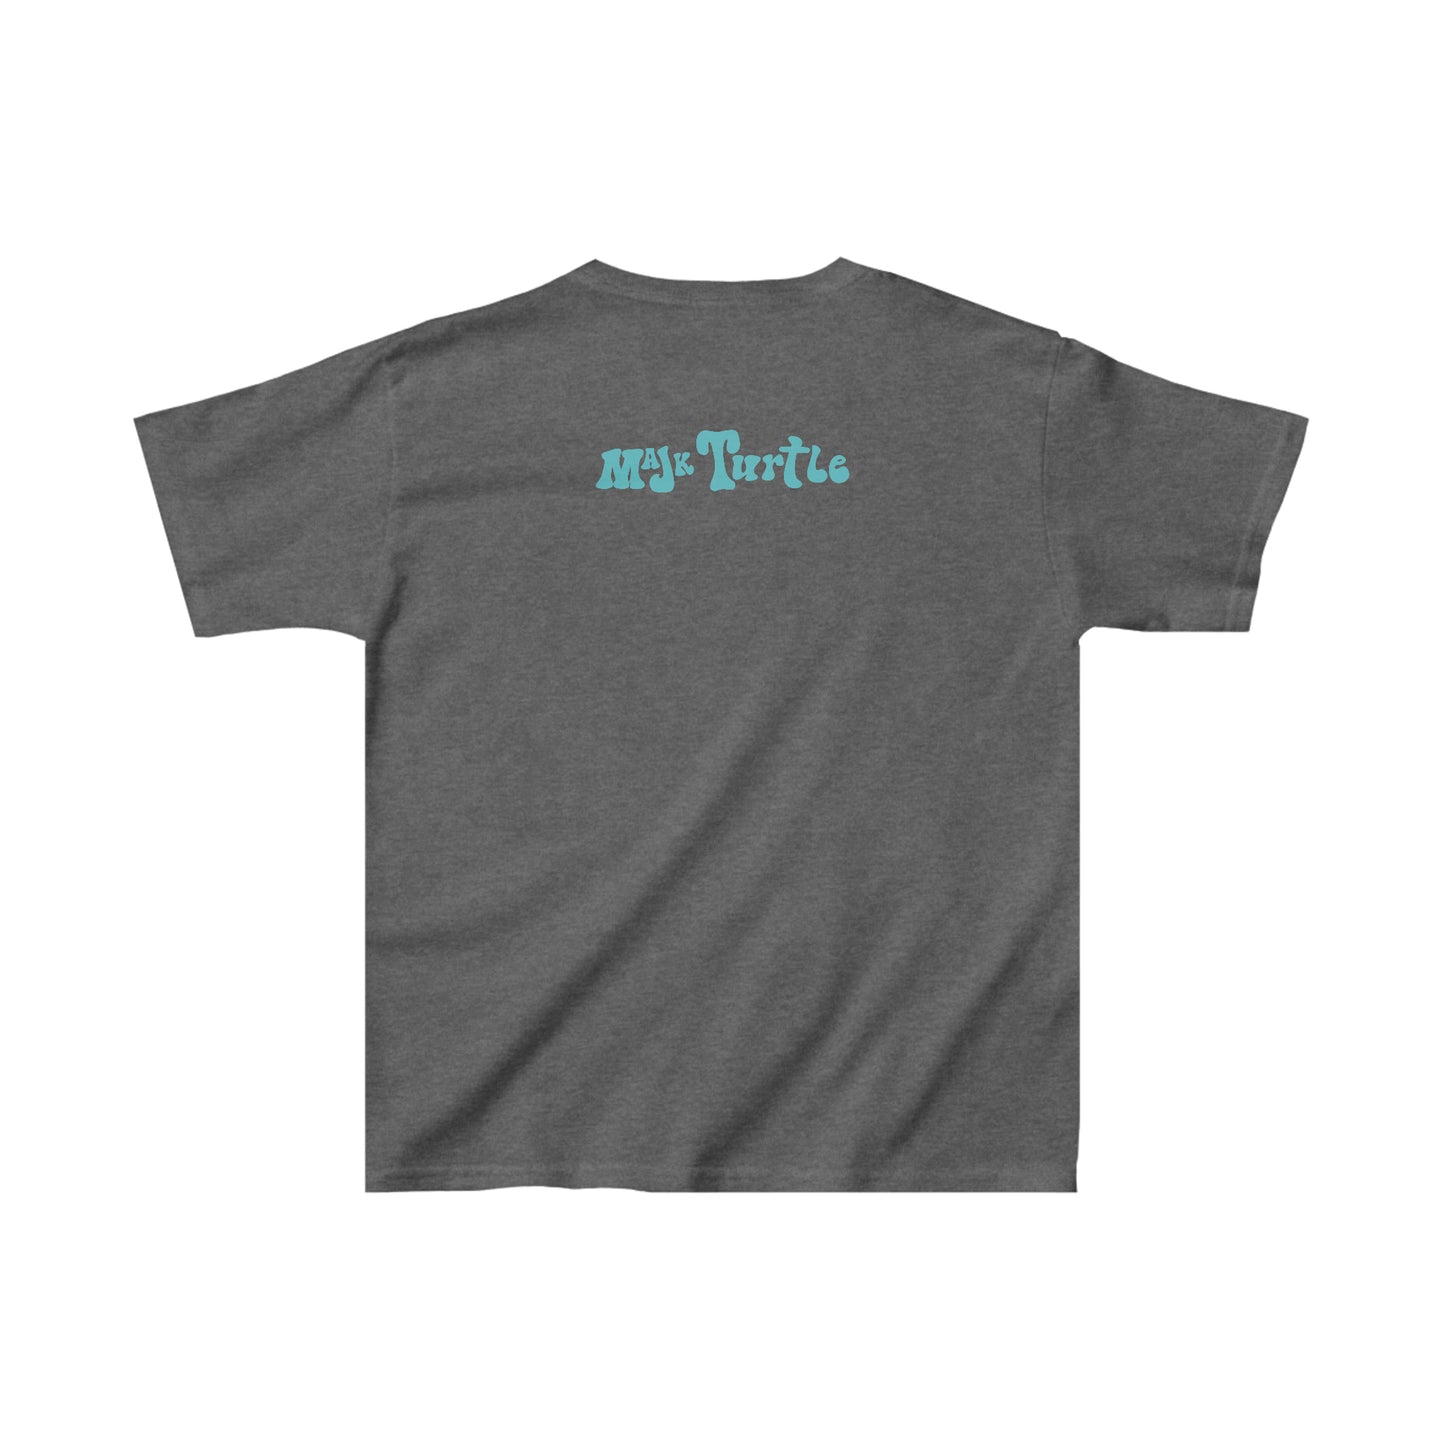 Kid's Classic Cotton Tee,  Bestie's T-shirt w/ MaJK Turtle Logo on back